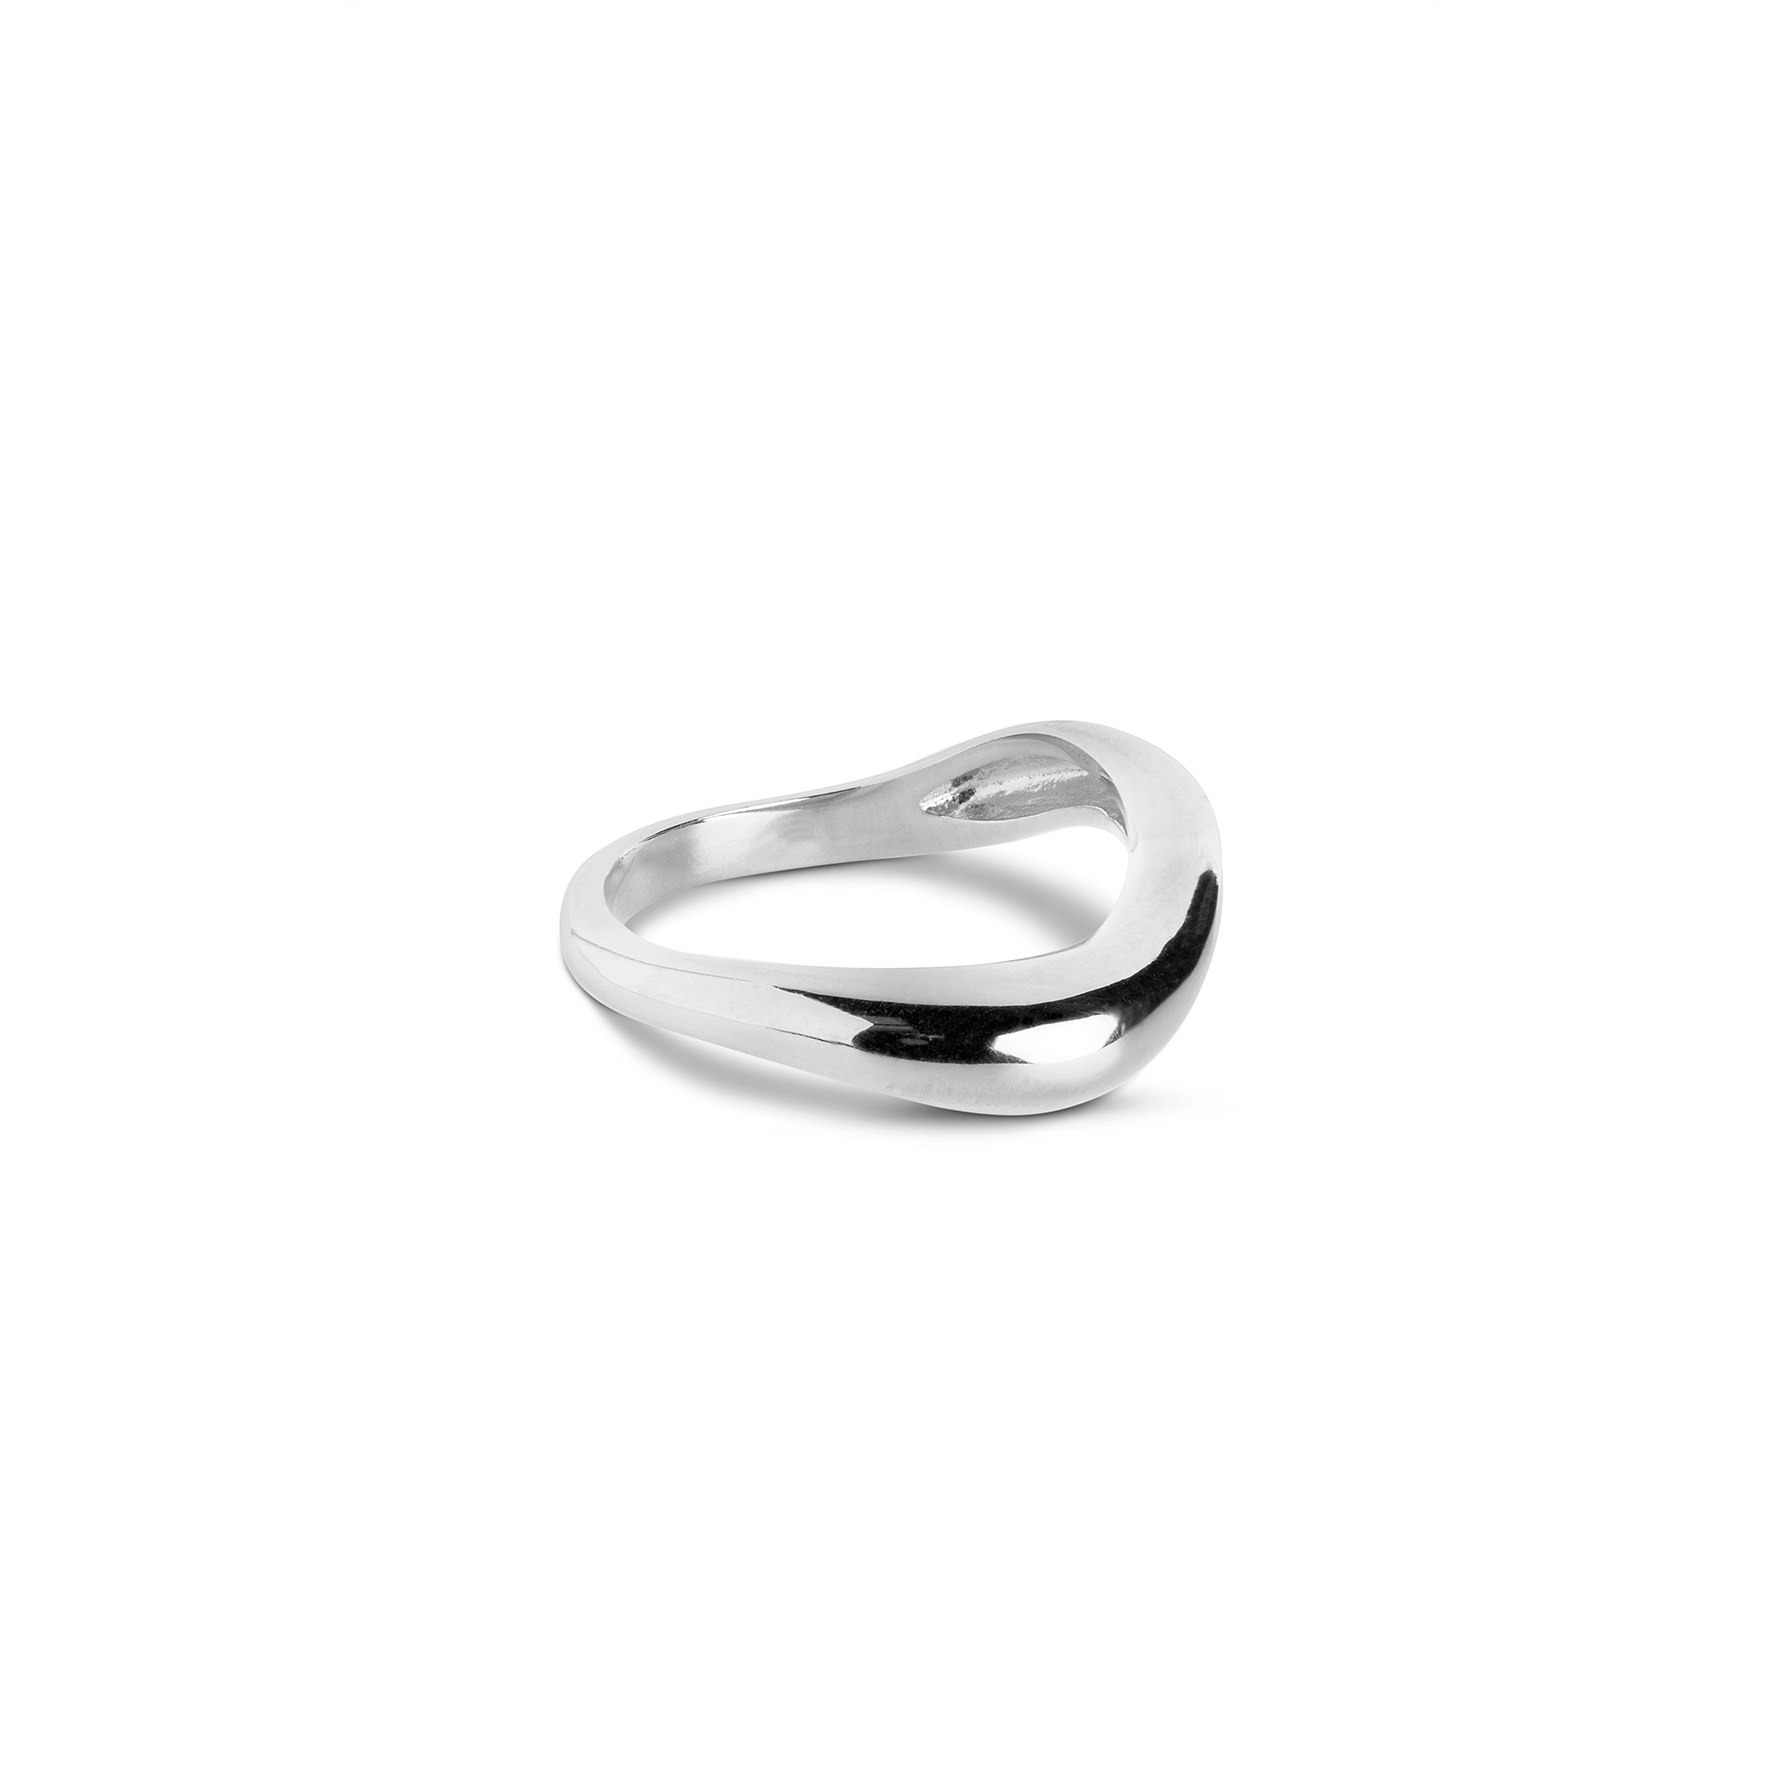 Agnete Small Ring from Enamel Copenhagen in Silver Sterling 925